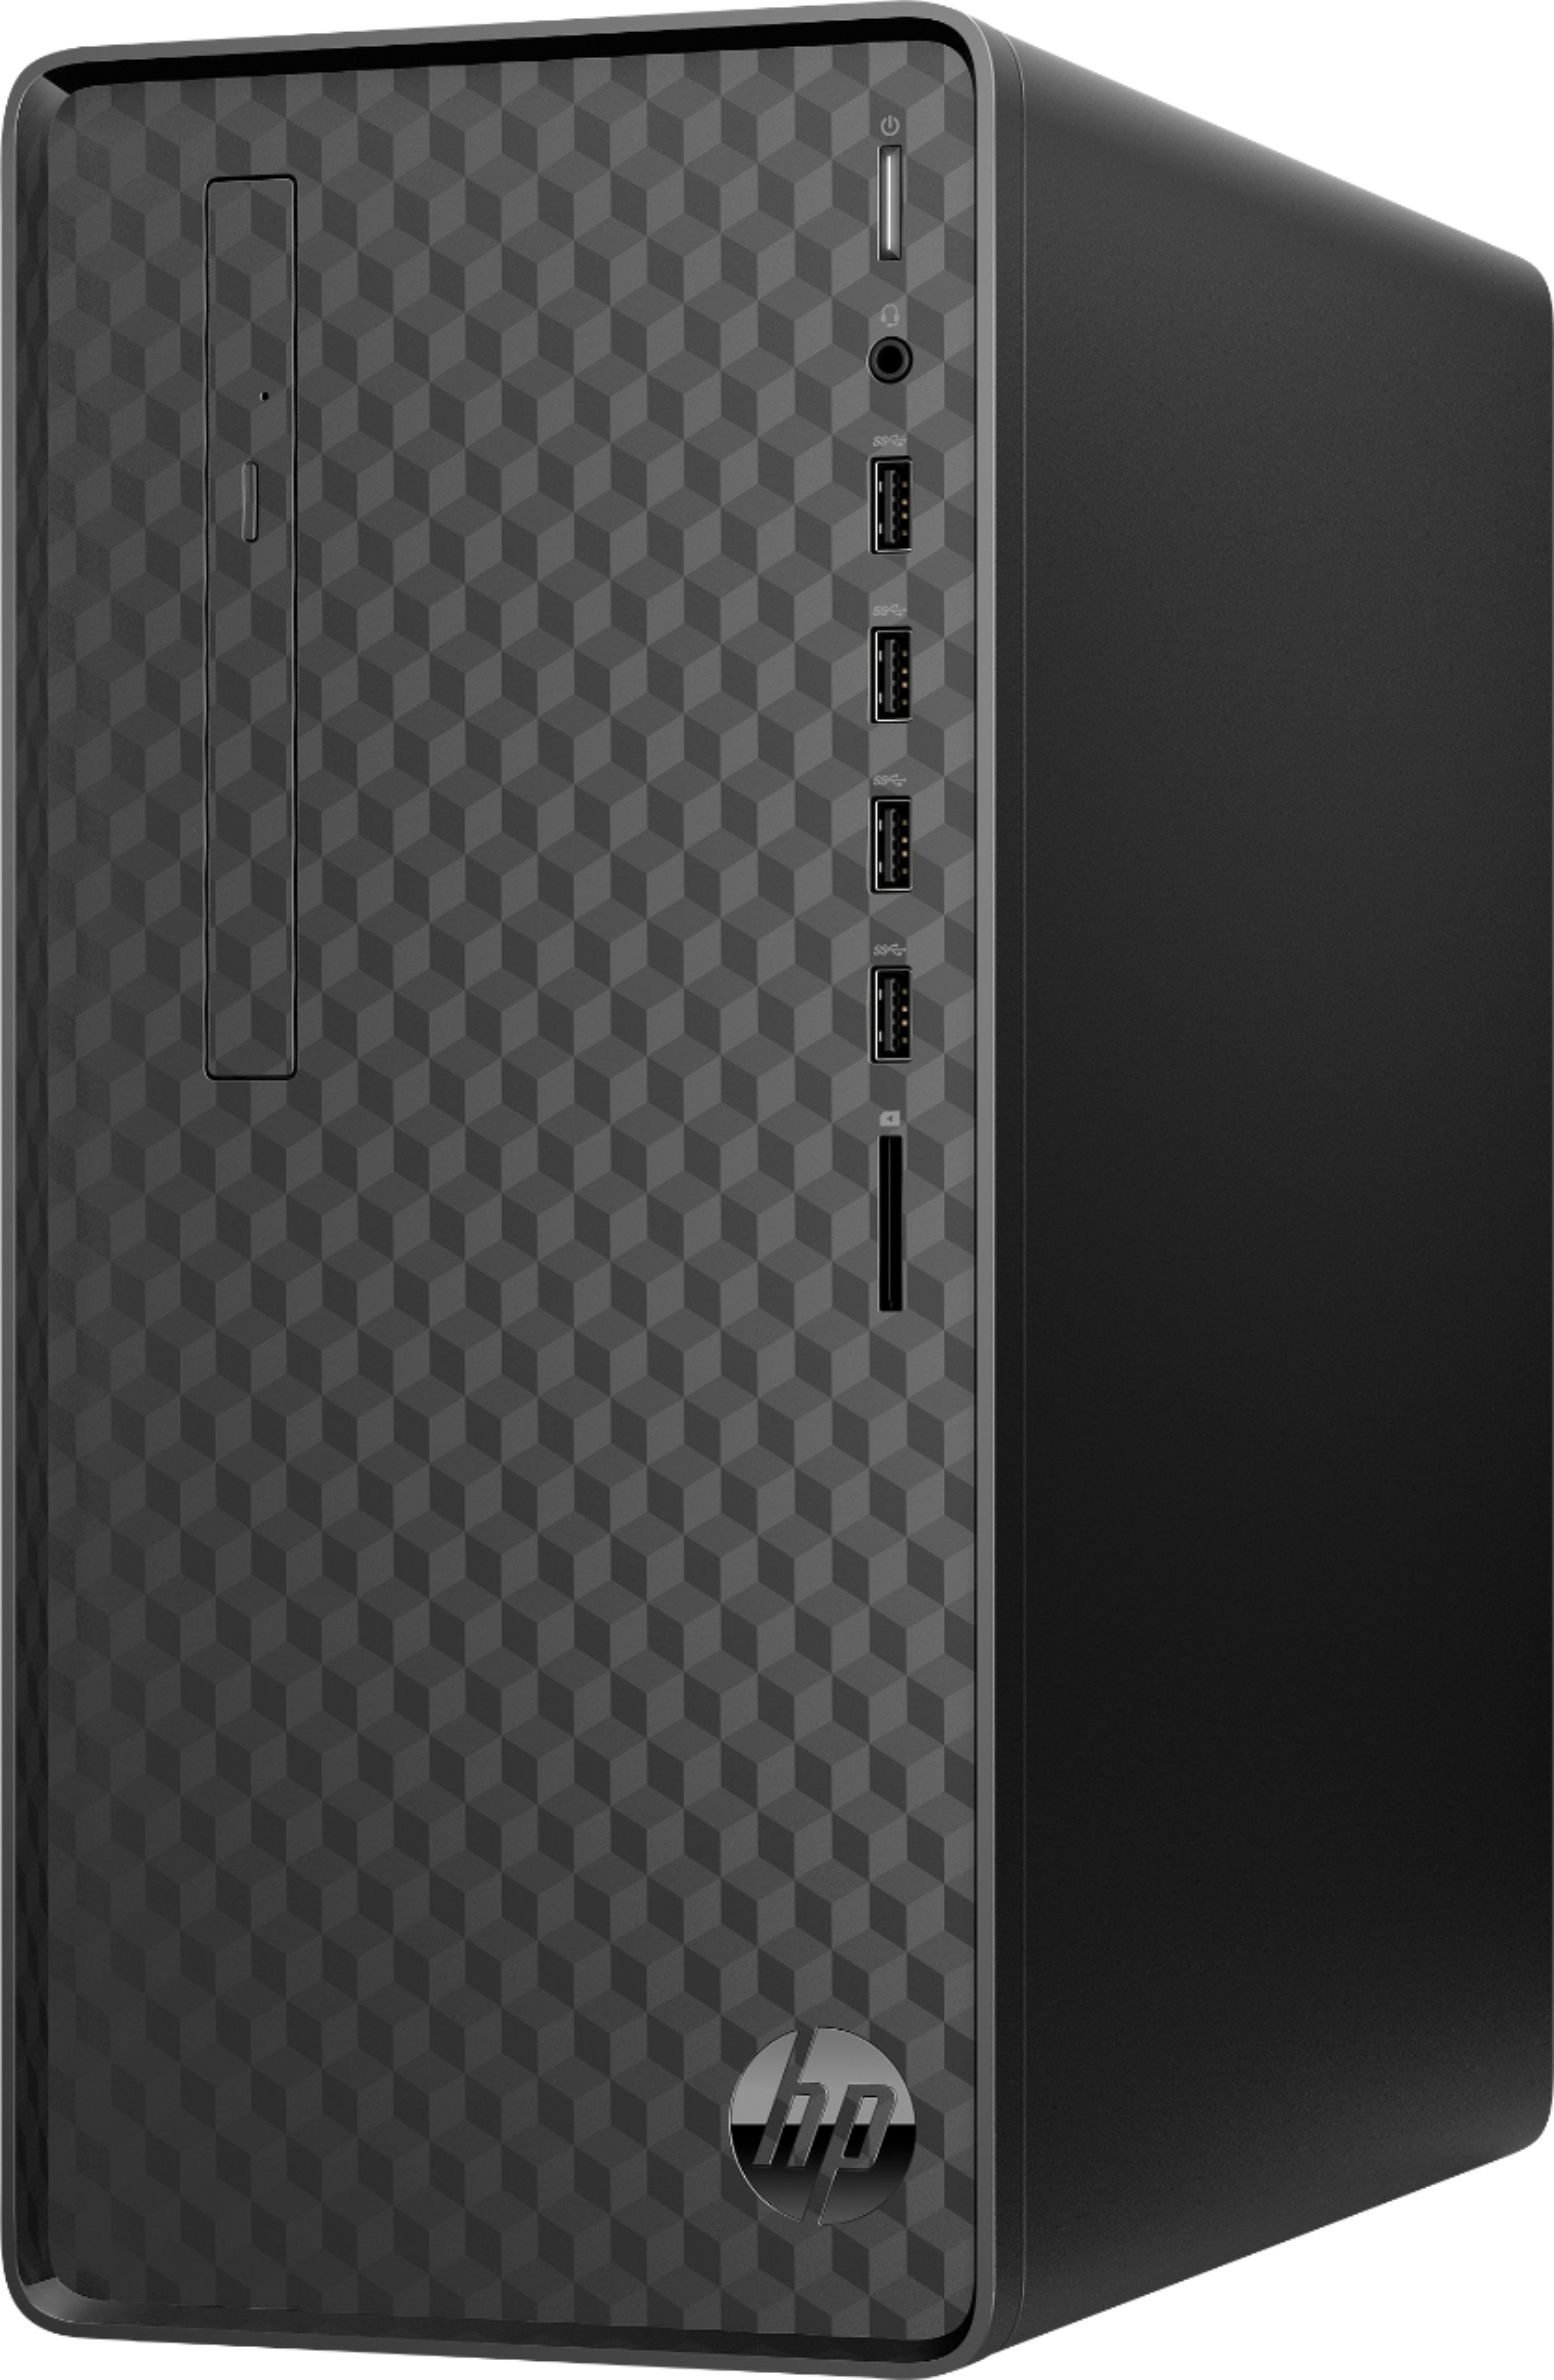 Angle View: HP - t430 Thin Client Desktop - Intel Celeron N4000 - 2 GB Memory - 16 GB Flash Storage